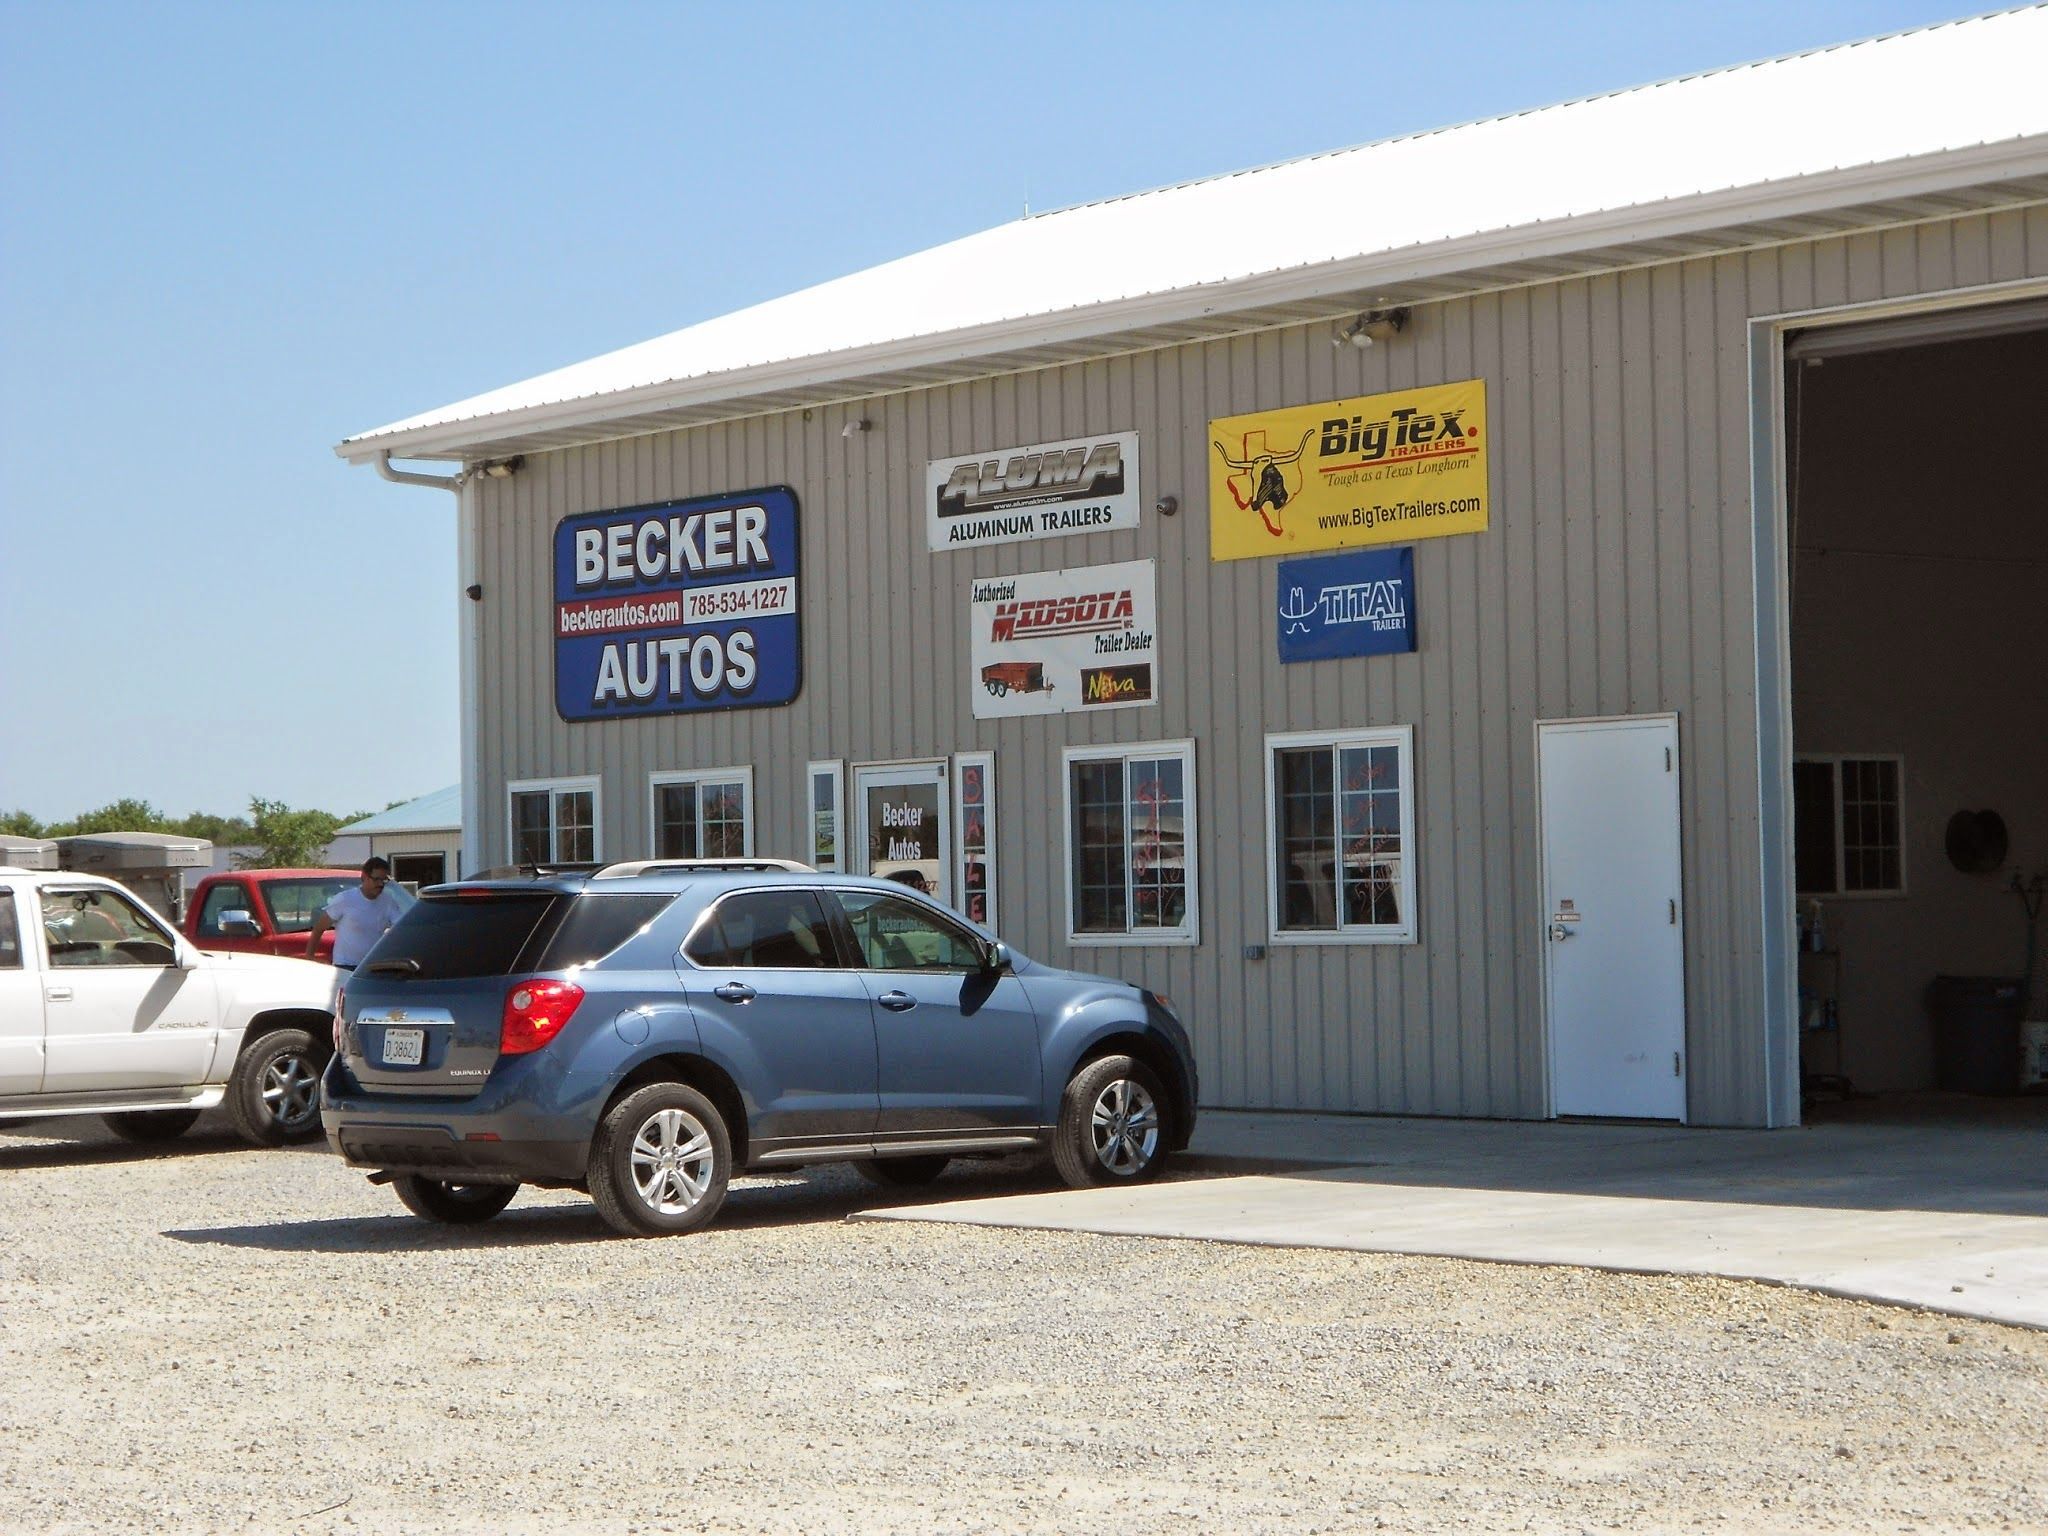 Services & Products Becker Autos Trailers & Camper Supercenter in Beloit KS